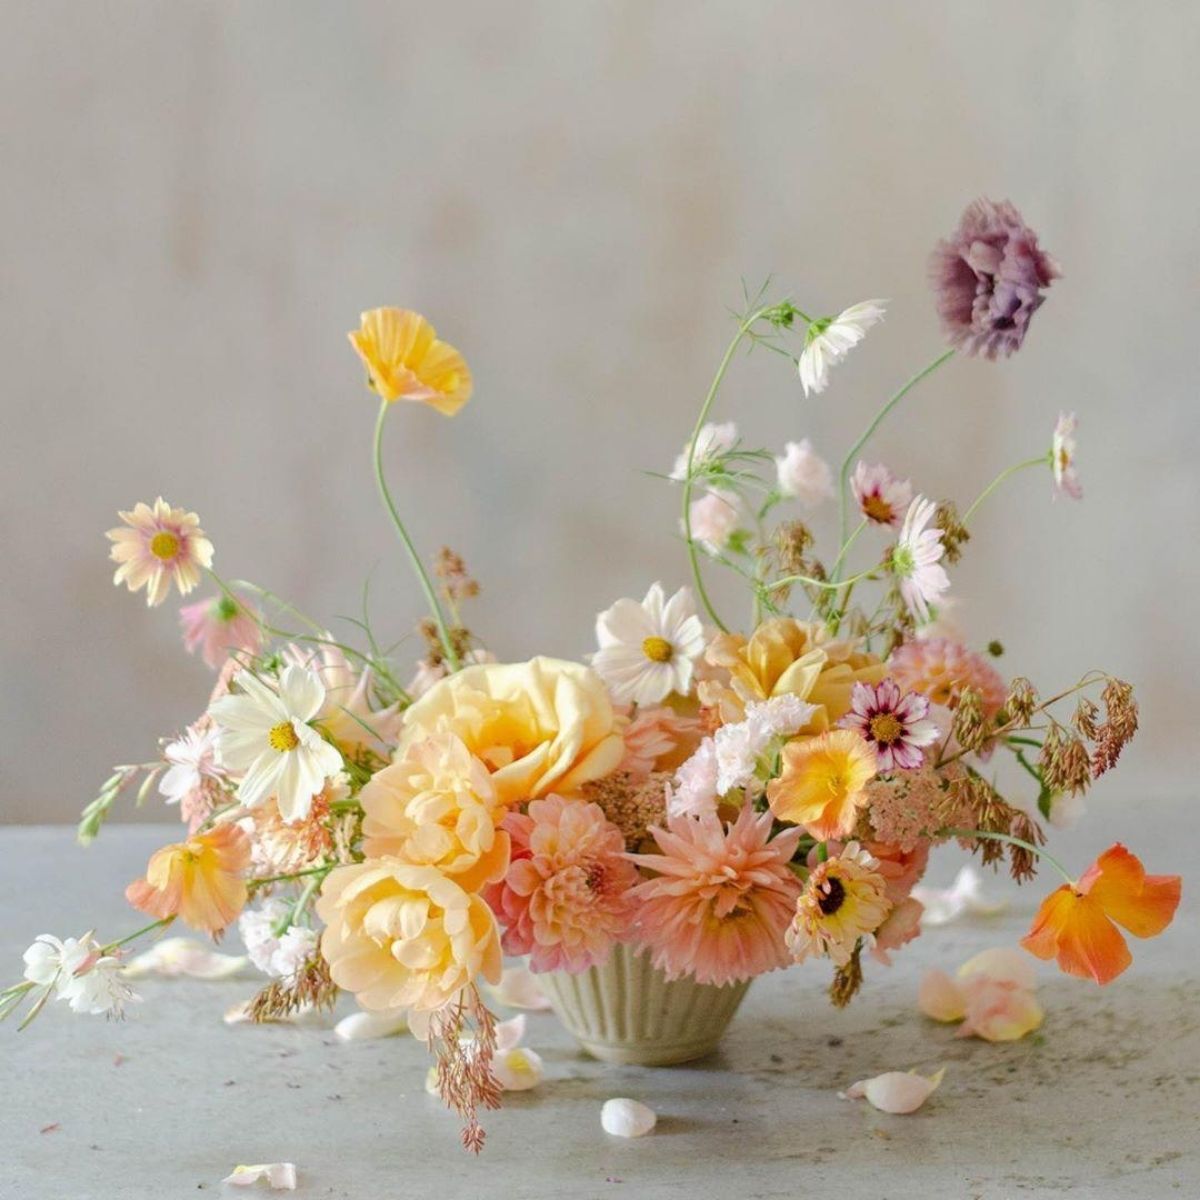 5-beautiful-summer-flower-designs-on-instagram-featured